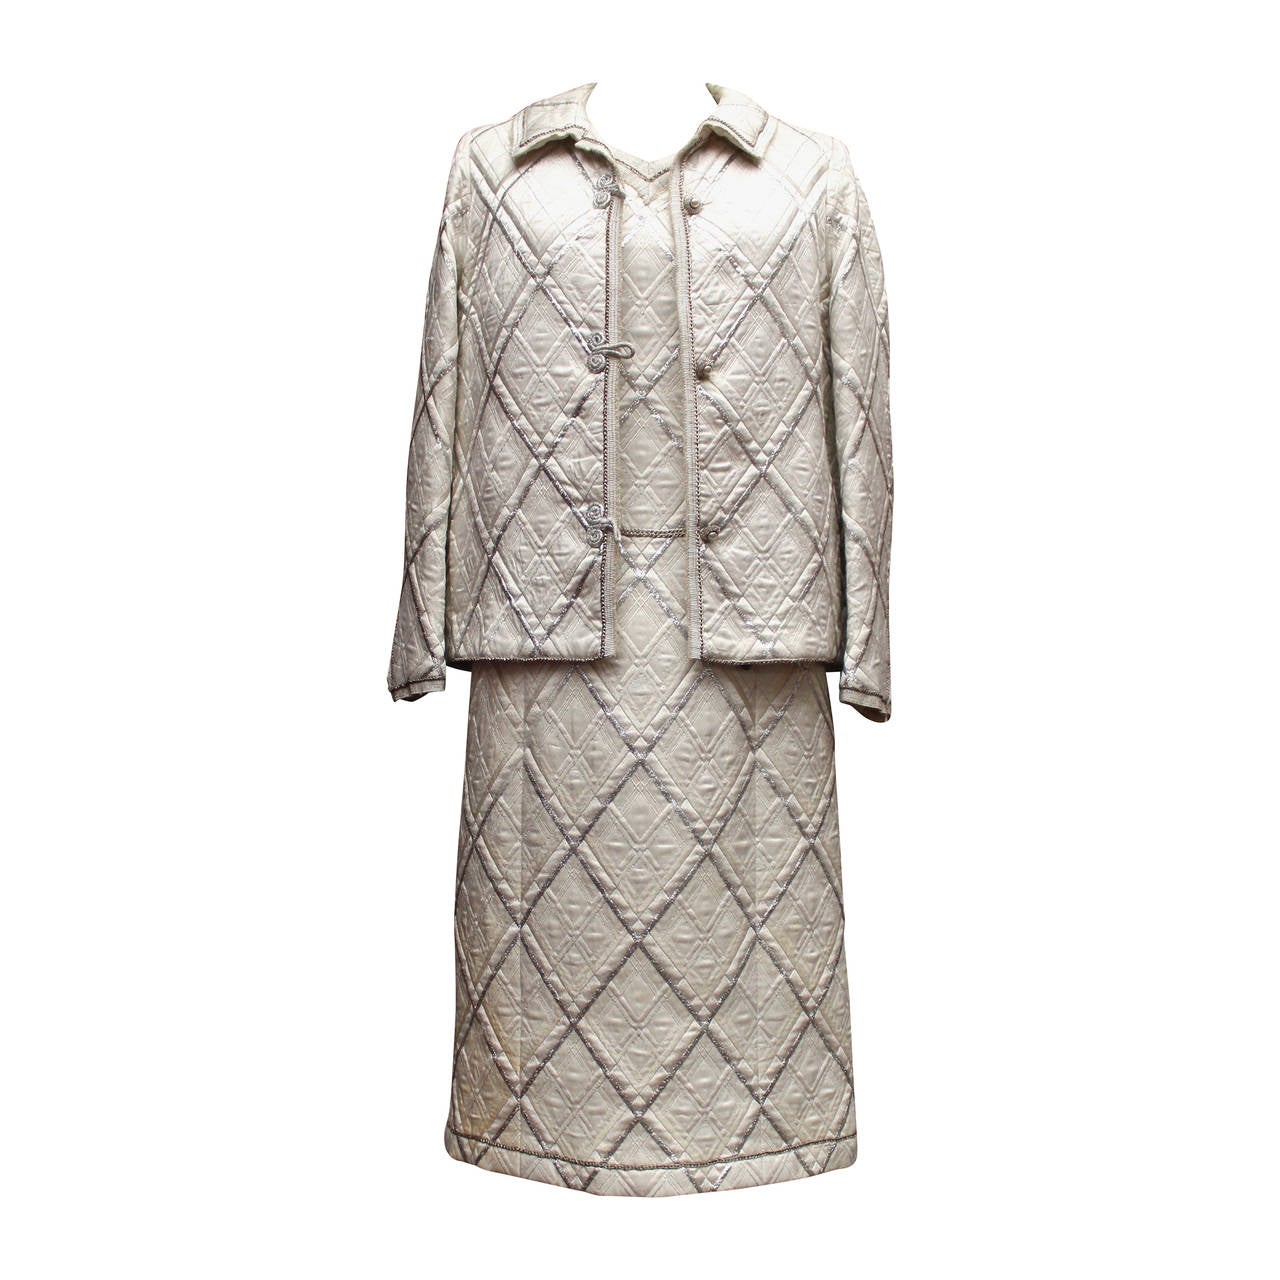 1960s Chanel Haute Couture White and Silver Brocade Ensemble